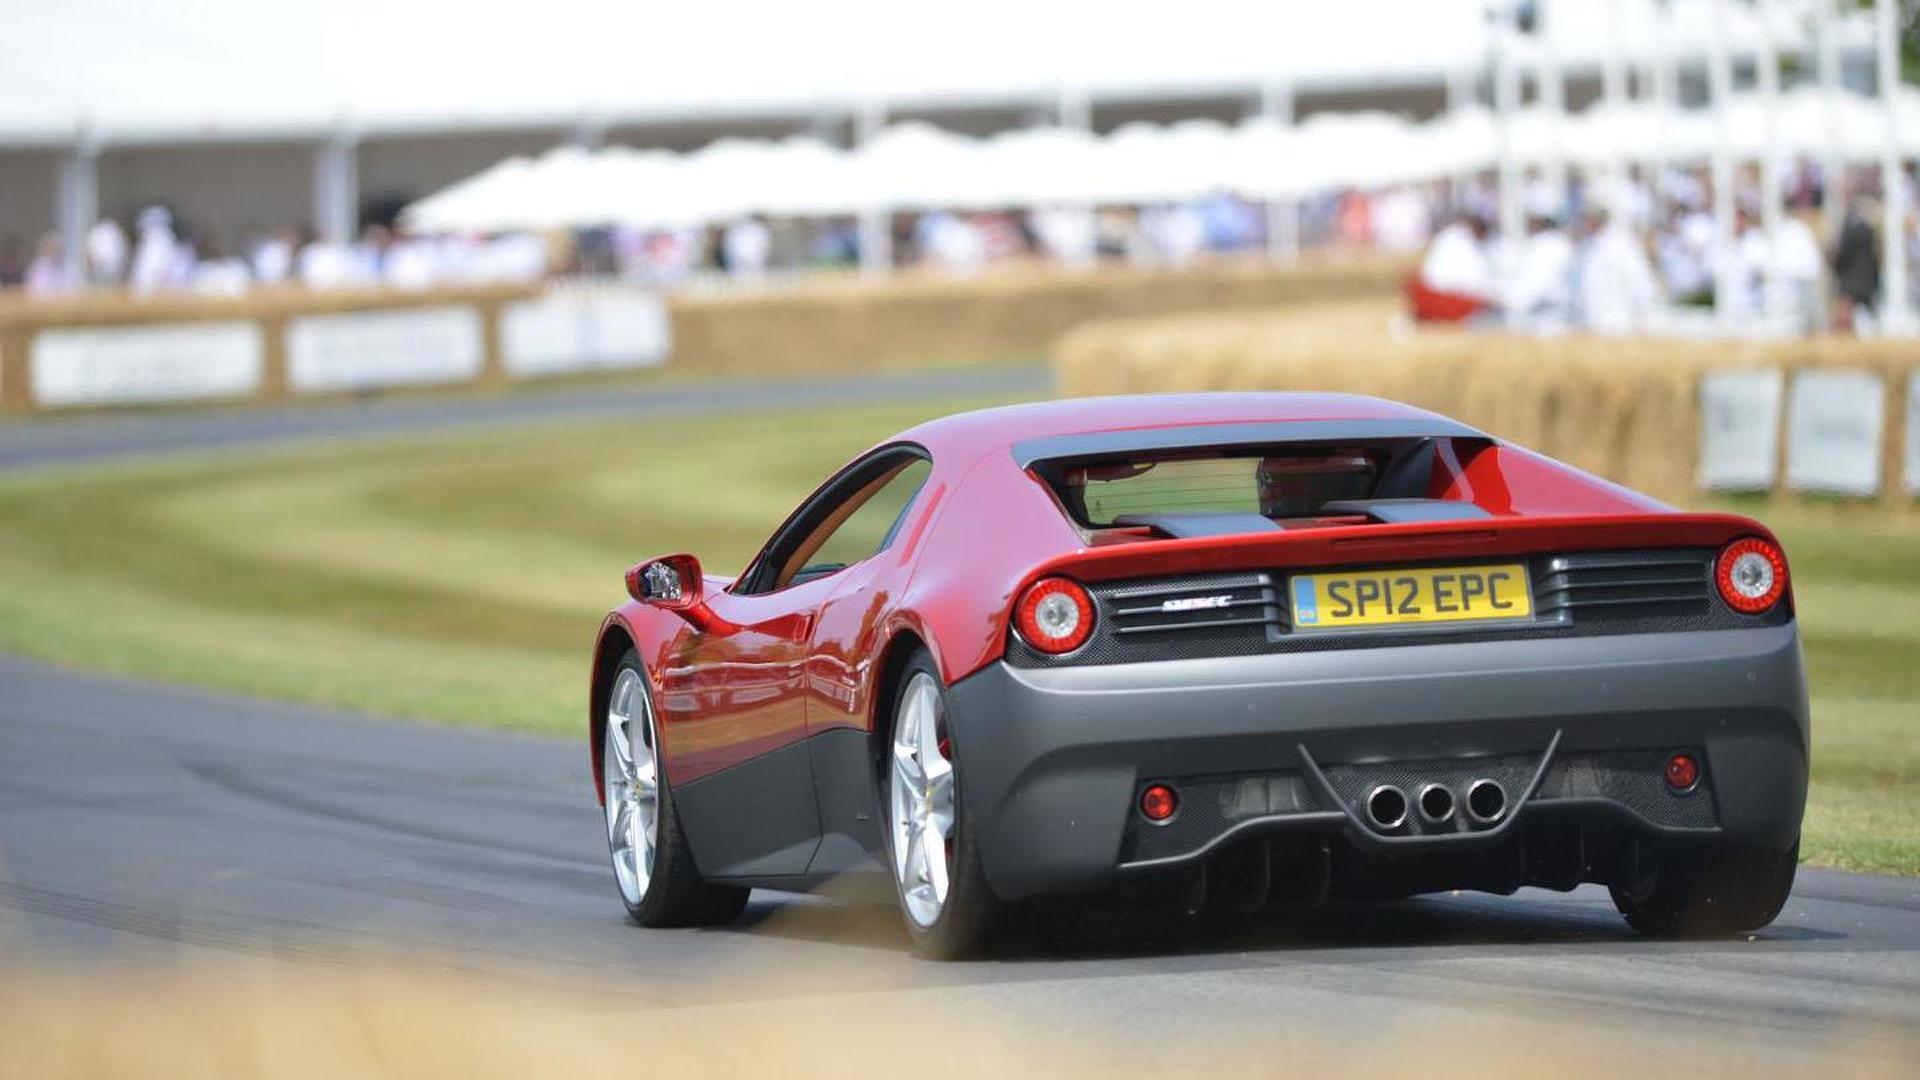 Ferrari SP12 EC at 2013 Goodwood Festival of Speed